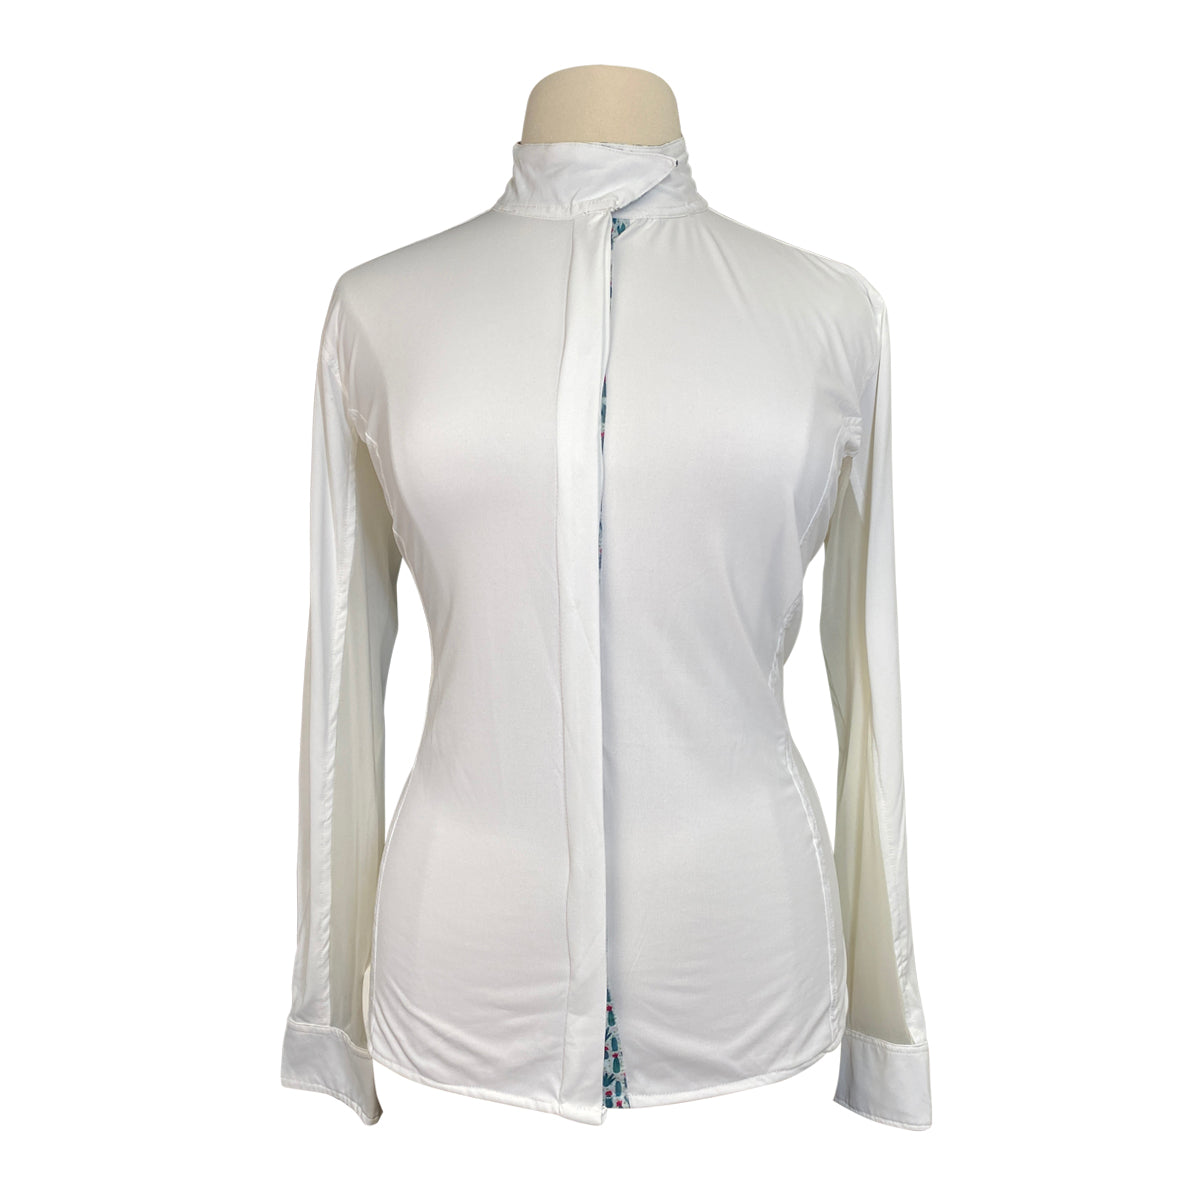 Smartpak Piper Long Sleeve Show Shirt in White/Cacti 